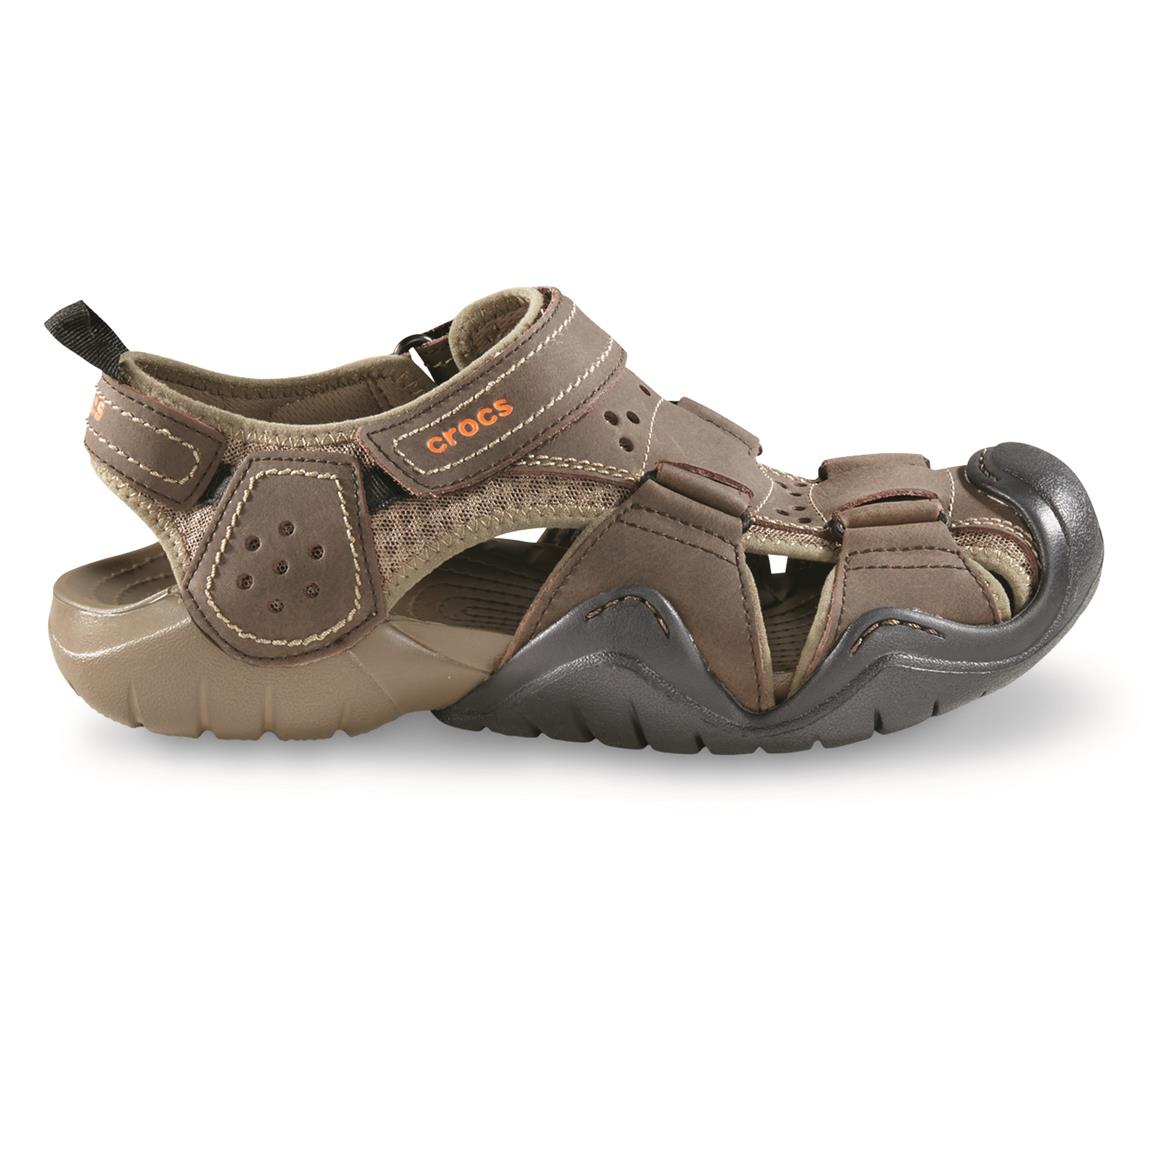 Crocs Men's Swiftwater Leather Fisherman Sandals - 676669, Sandals ...